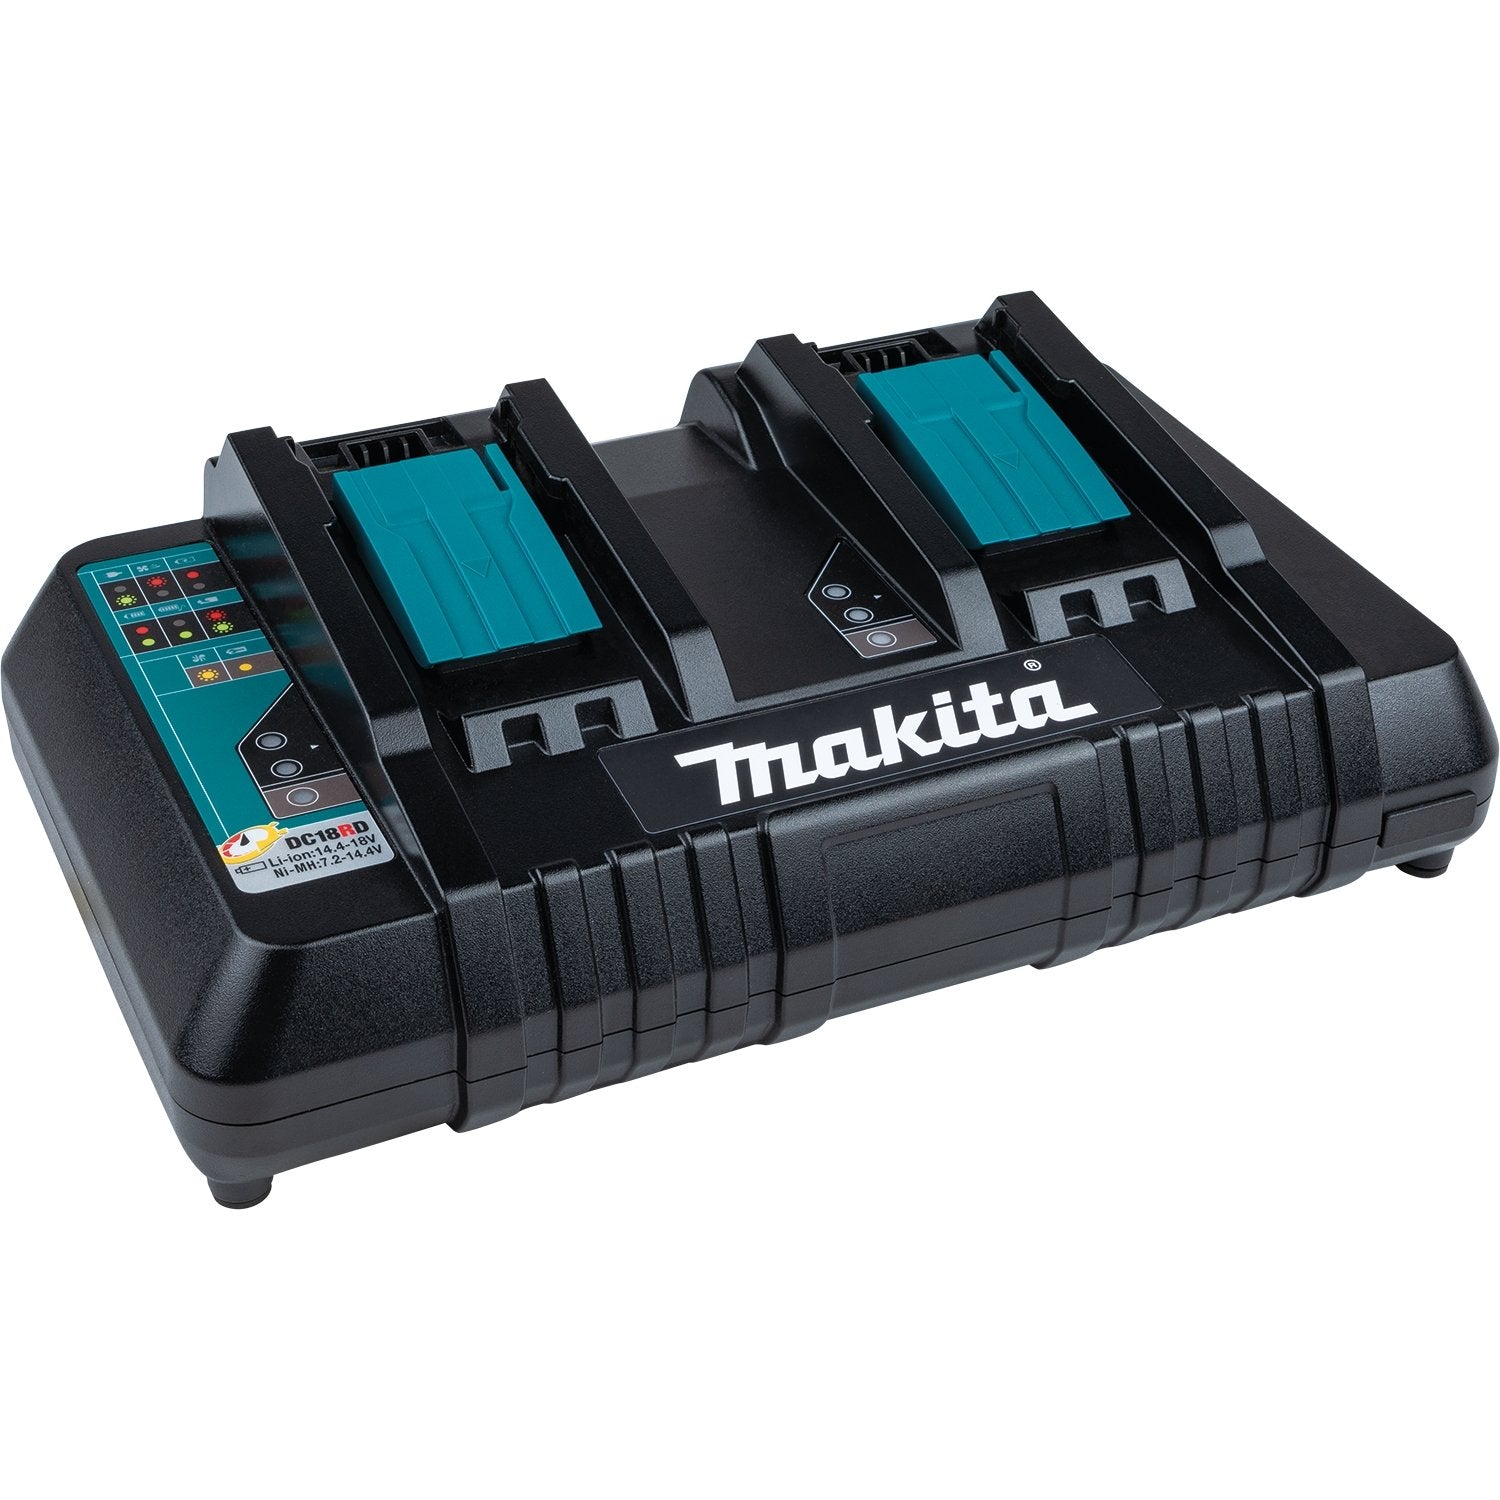 Makita 18V 2.0Ah Compact Lithium-Ion Battery and Charger Kit